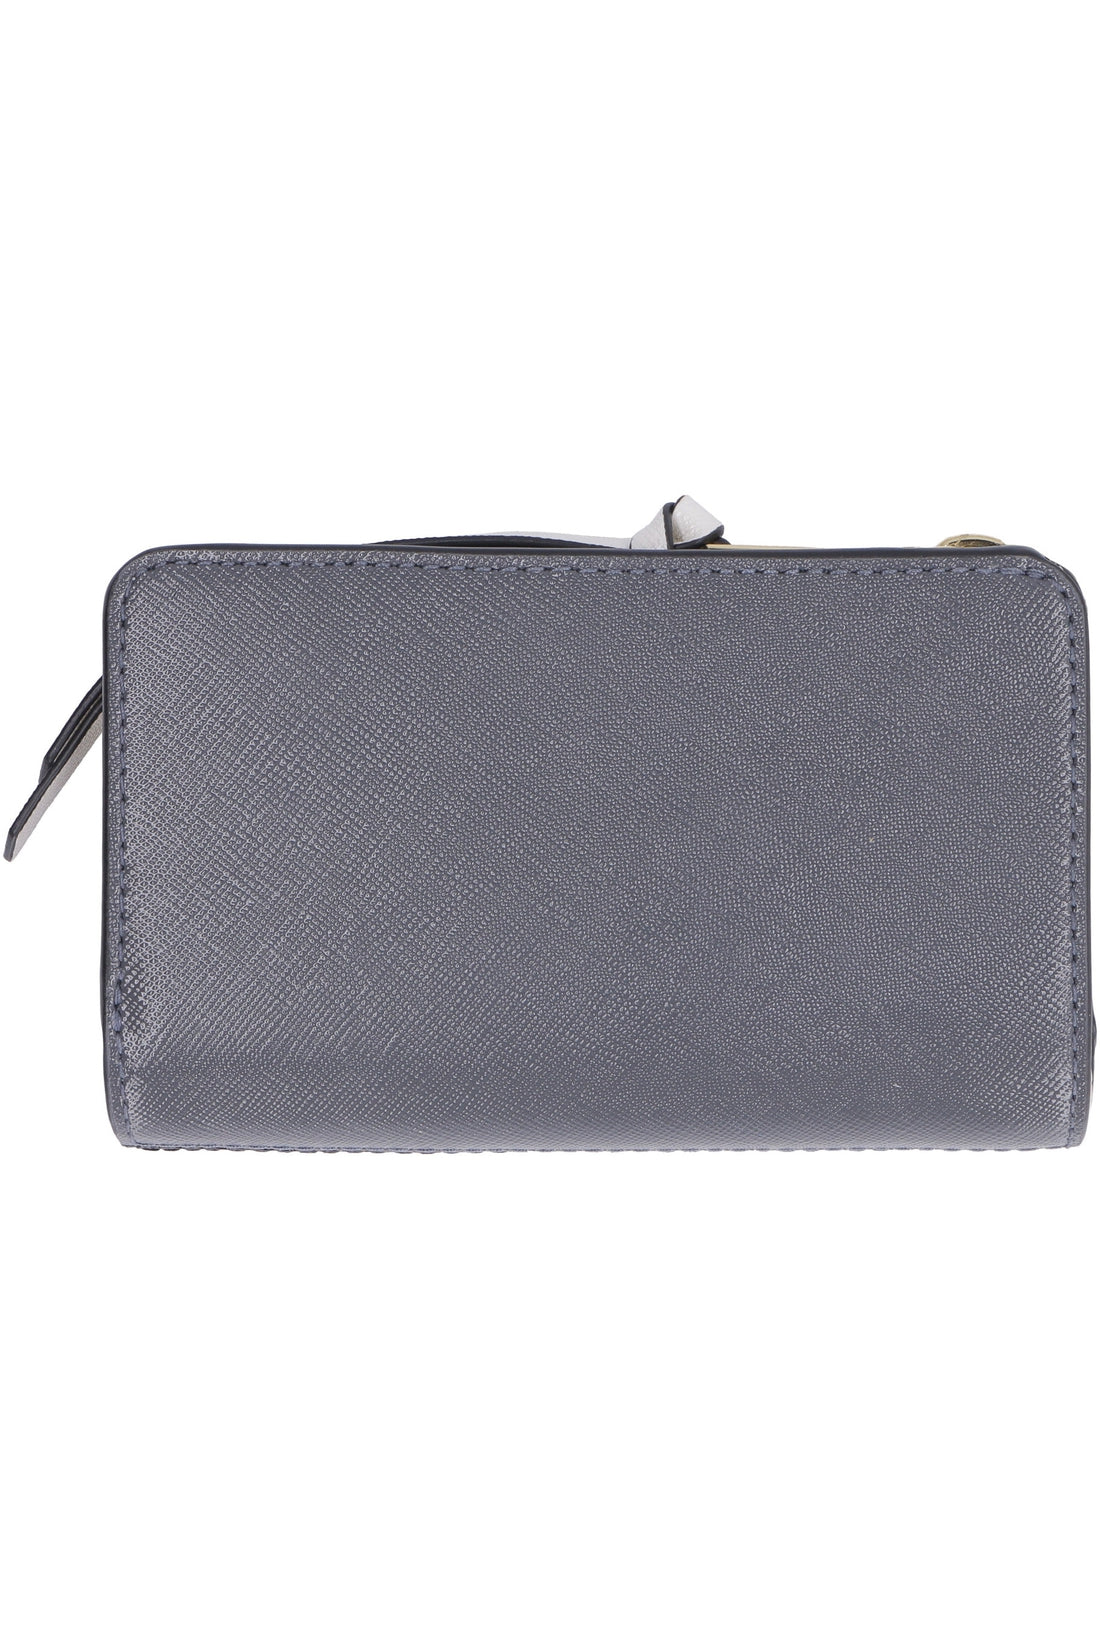 Marc Jacobs-OUTLET-SALE-Snapshot leather wallet-ARCHIVIST